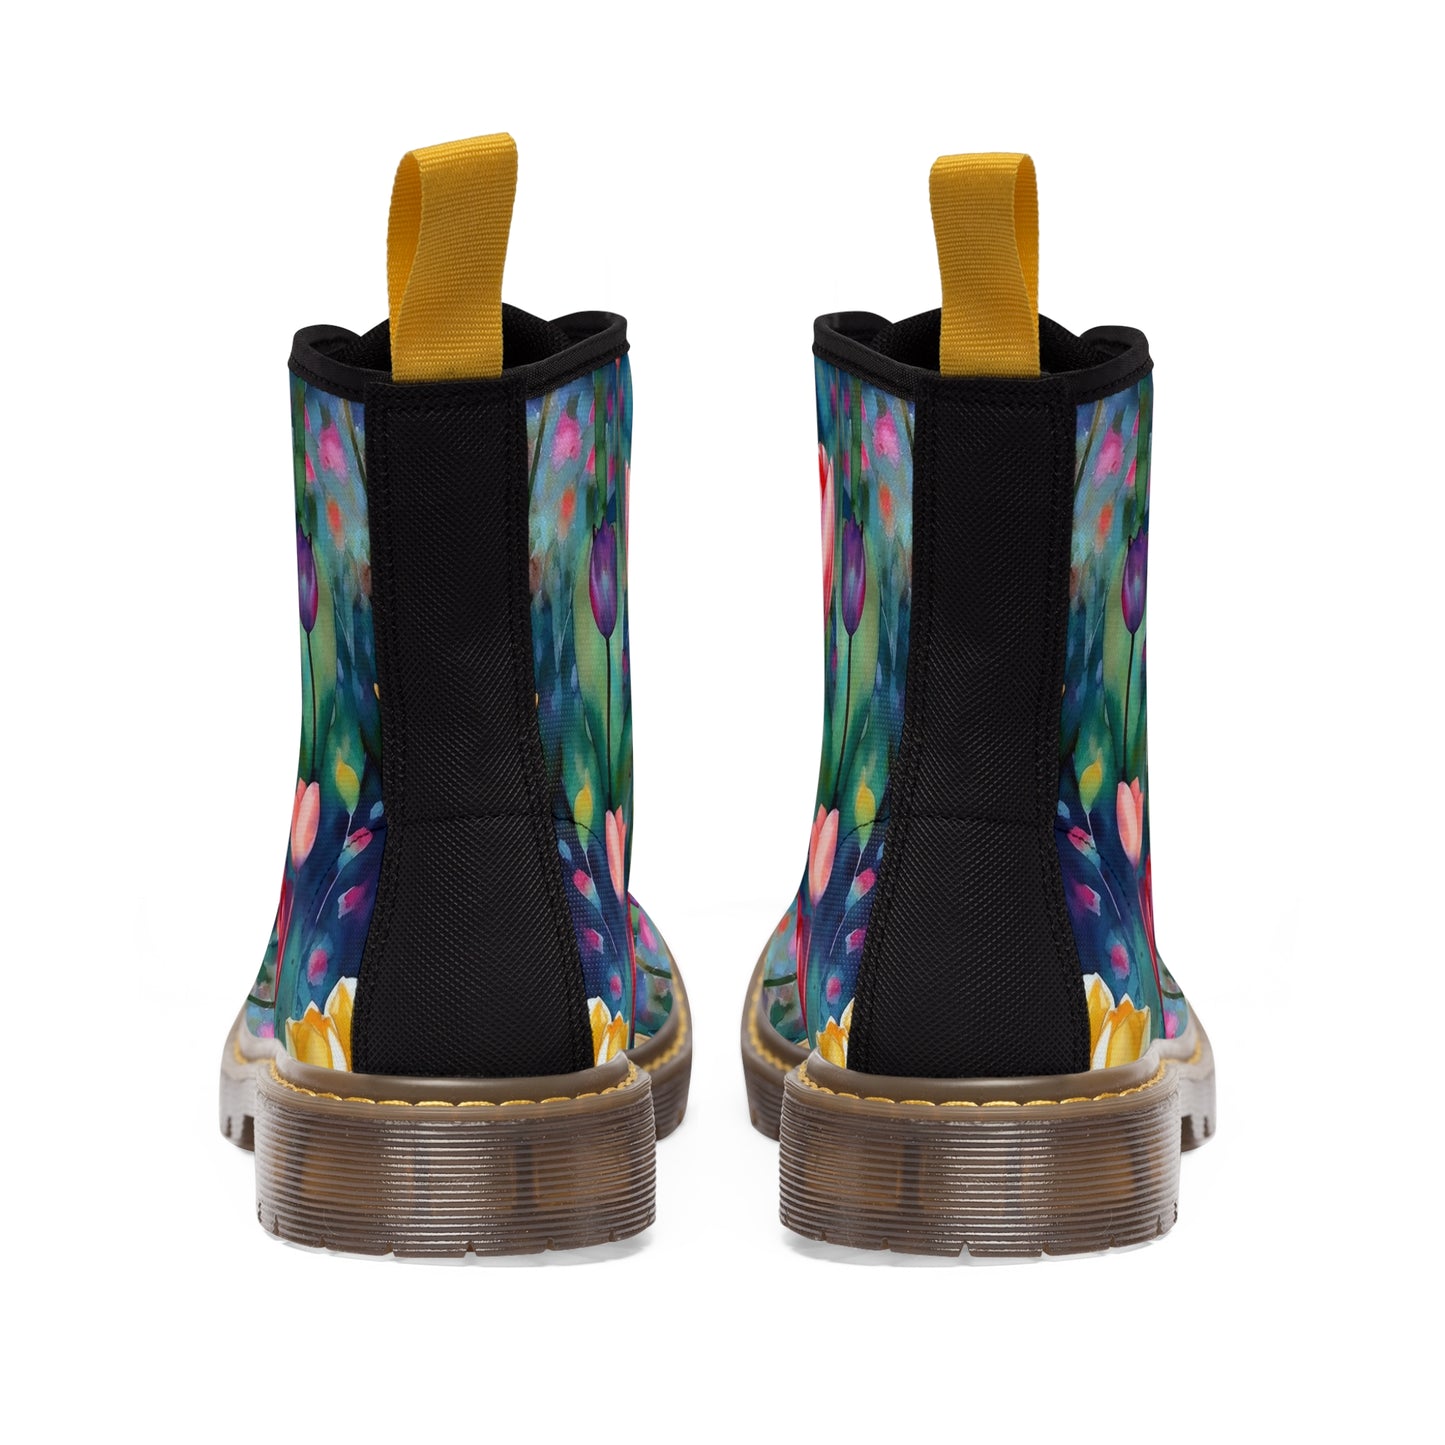 Midnight Sonata Watercolor Tulips Women's Canvas Boots